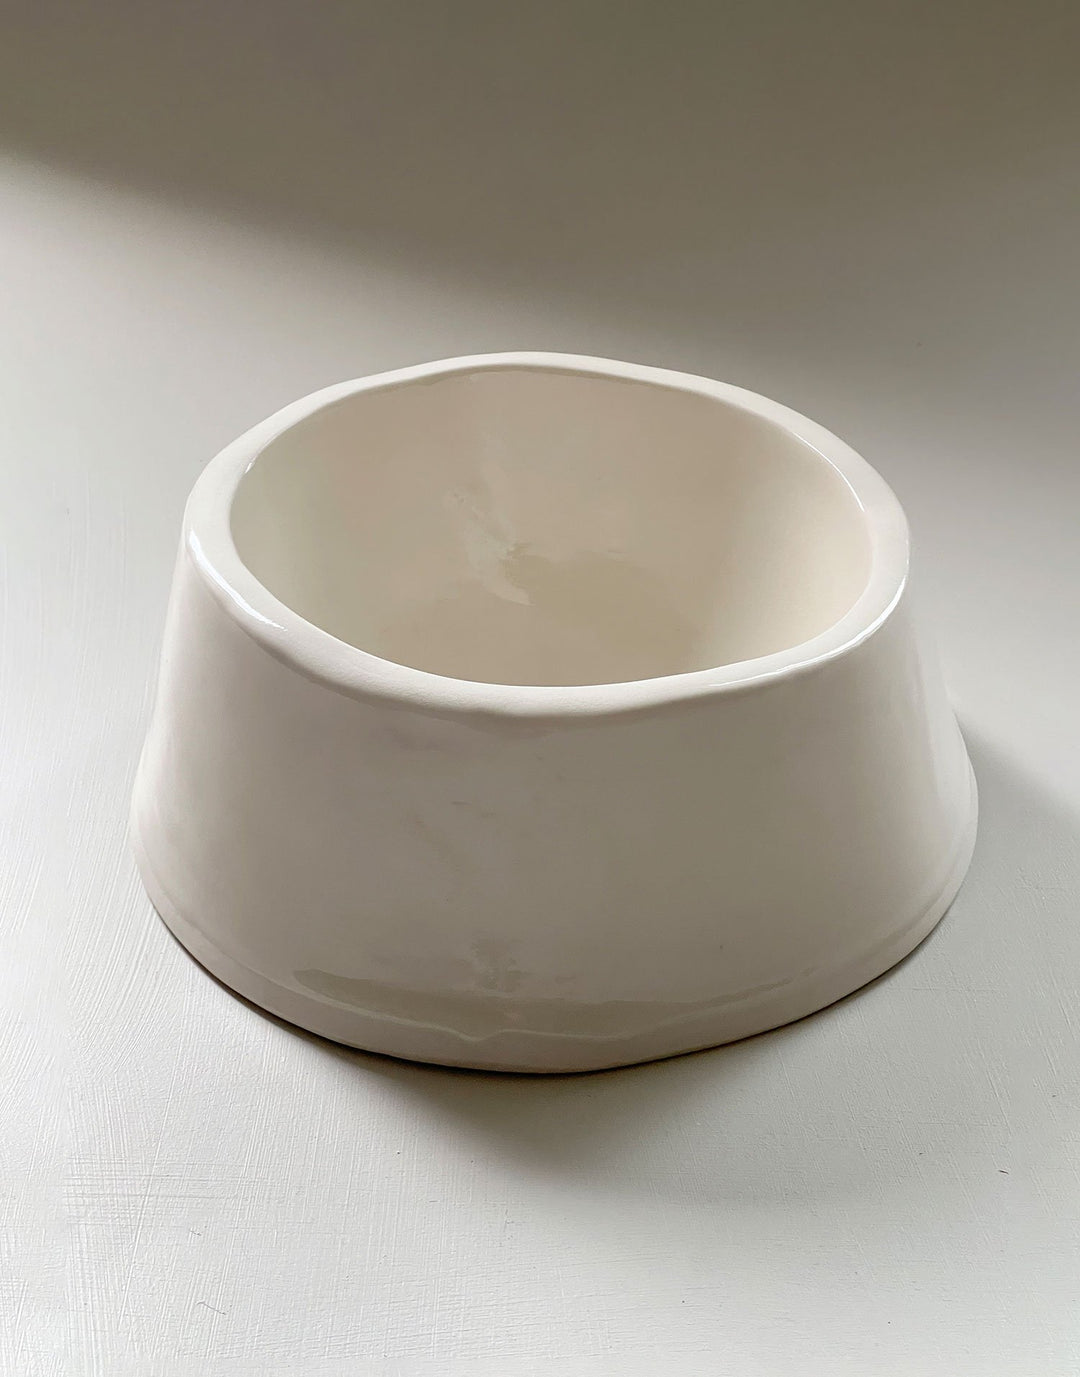 Haven & Key White Ceramic Bowl